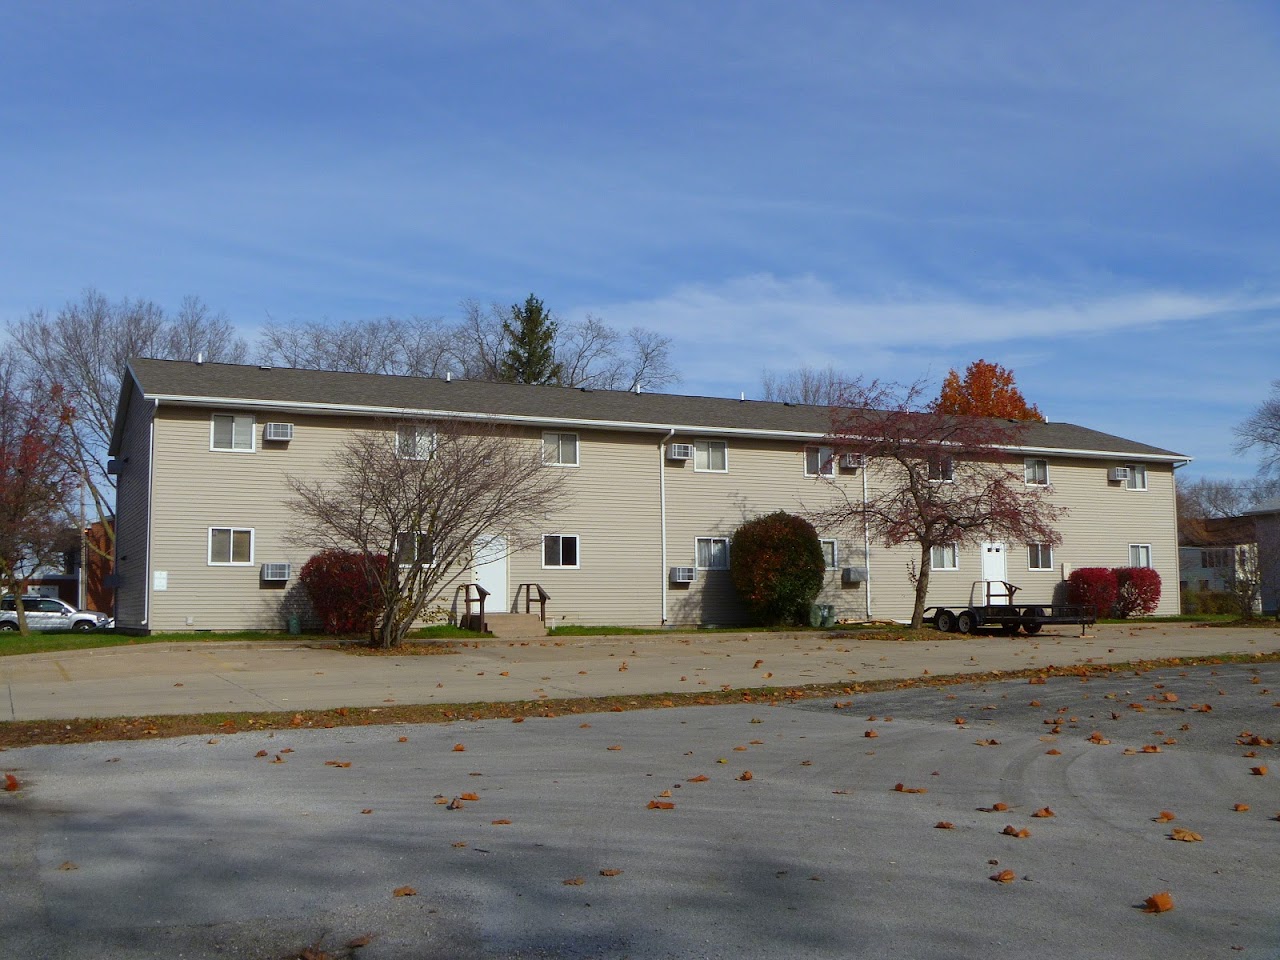 Photo of PONTIAC REGENCY APTS. Affordable housing located at 102 E MICHIGAN AVE PONTIAC, IL 61764